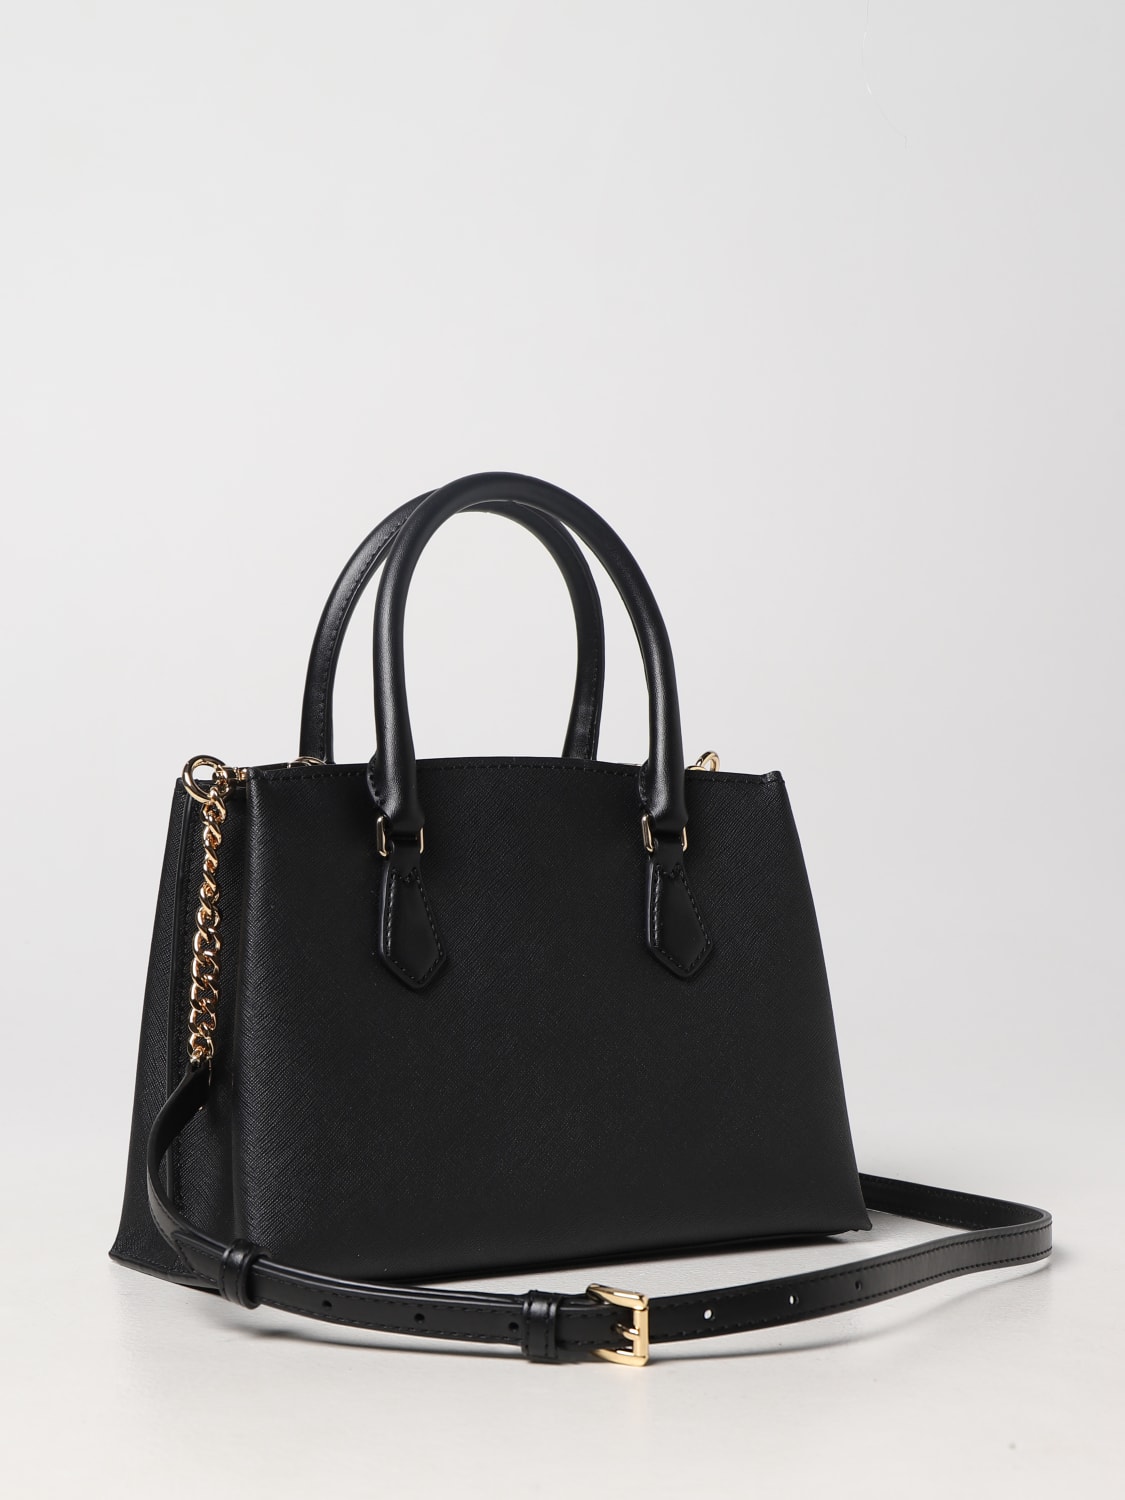 michael kors saffiano leather handbag